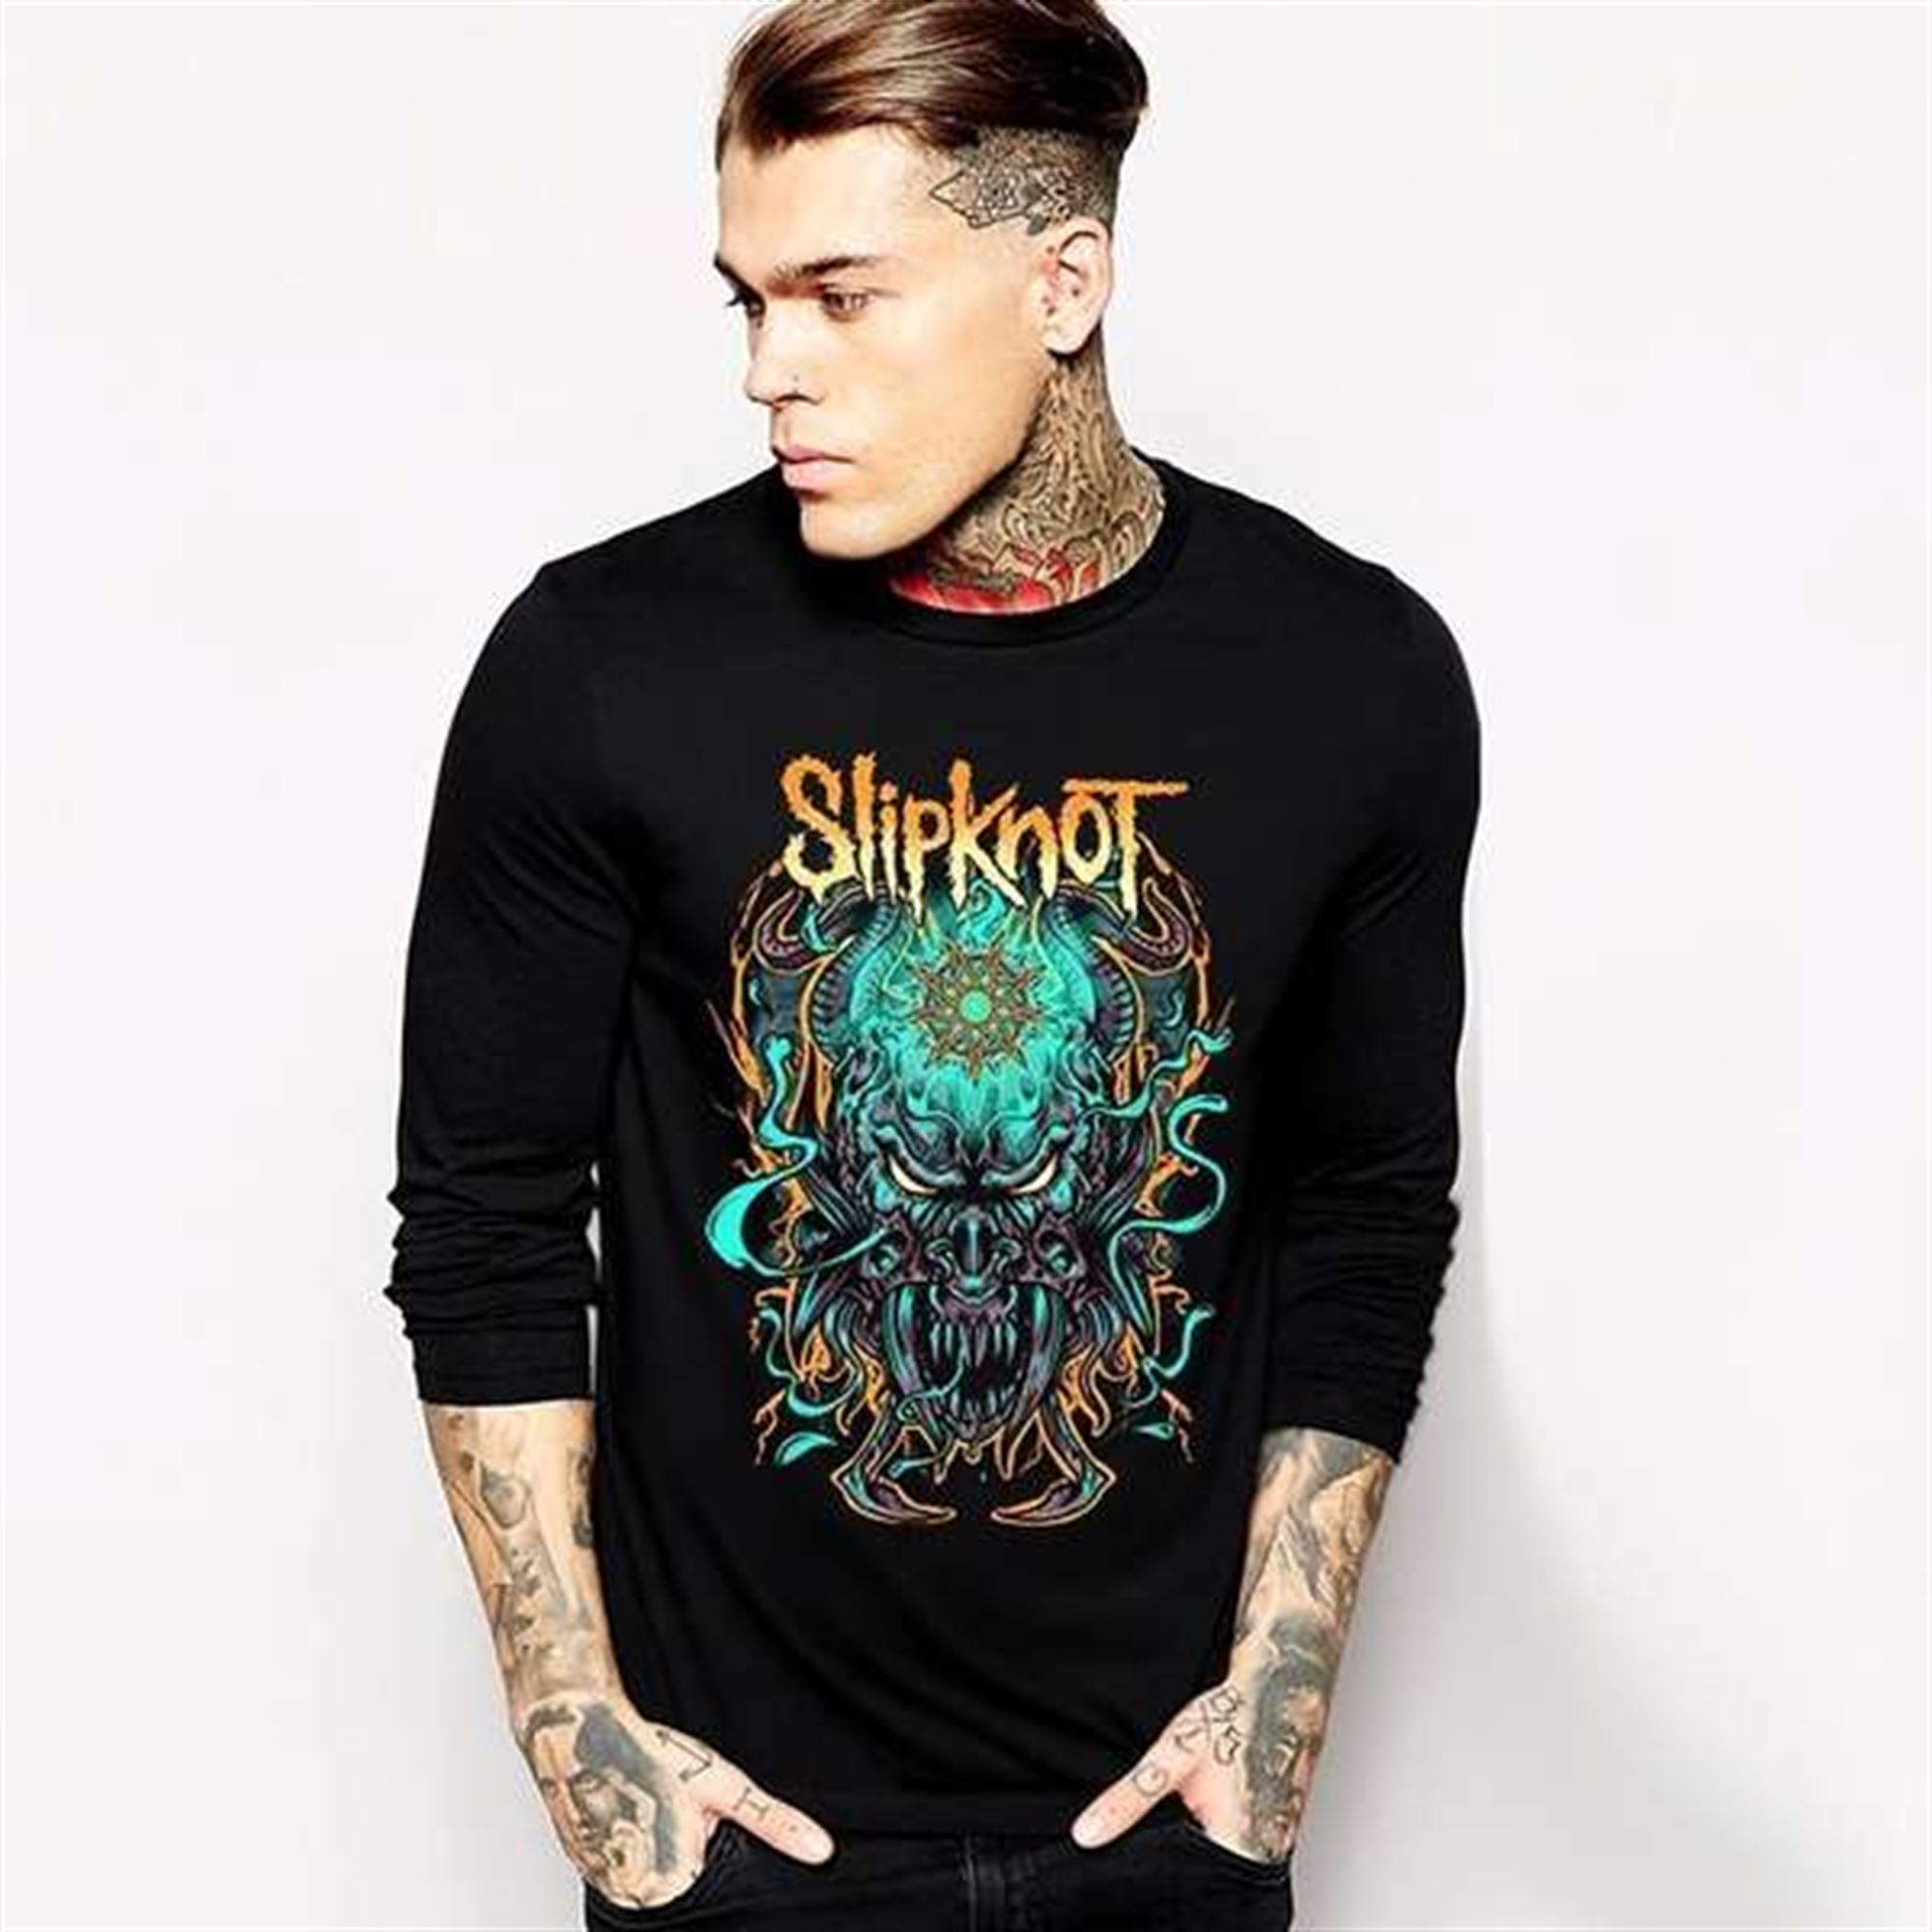 Joey Jordison Slipknot Classic Unisex T Shirt Plus Size Up To 5x